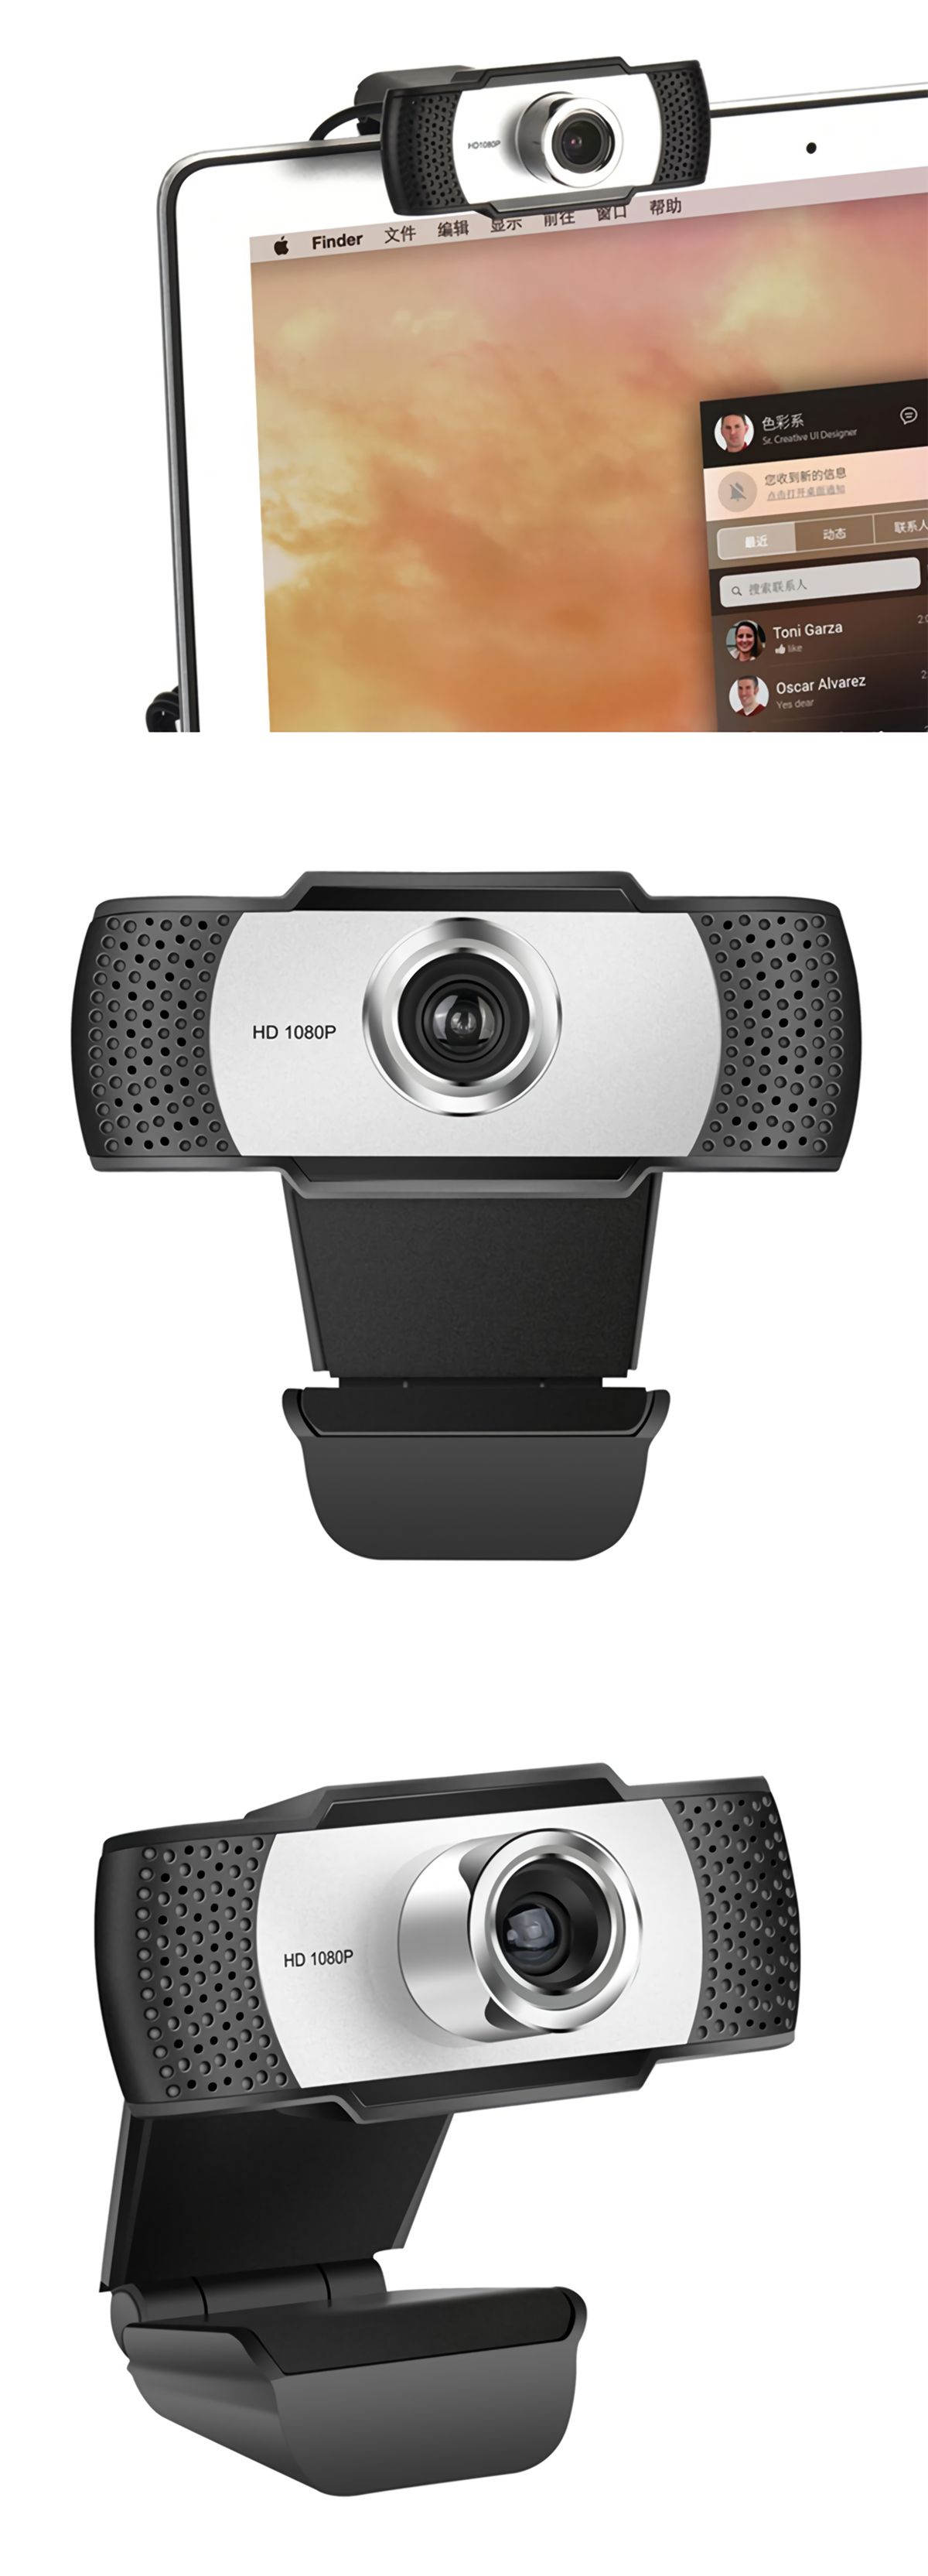 A8-HD-1080P-Webcam-CMOS-30FPS-USB-20-Built-in-Microphone-Webcam-HD-Camera-for-Desktop-Computer-Noteb-1663043